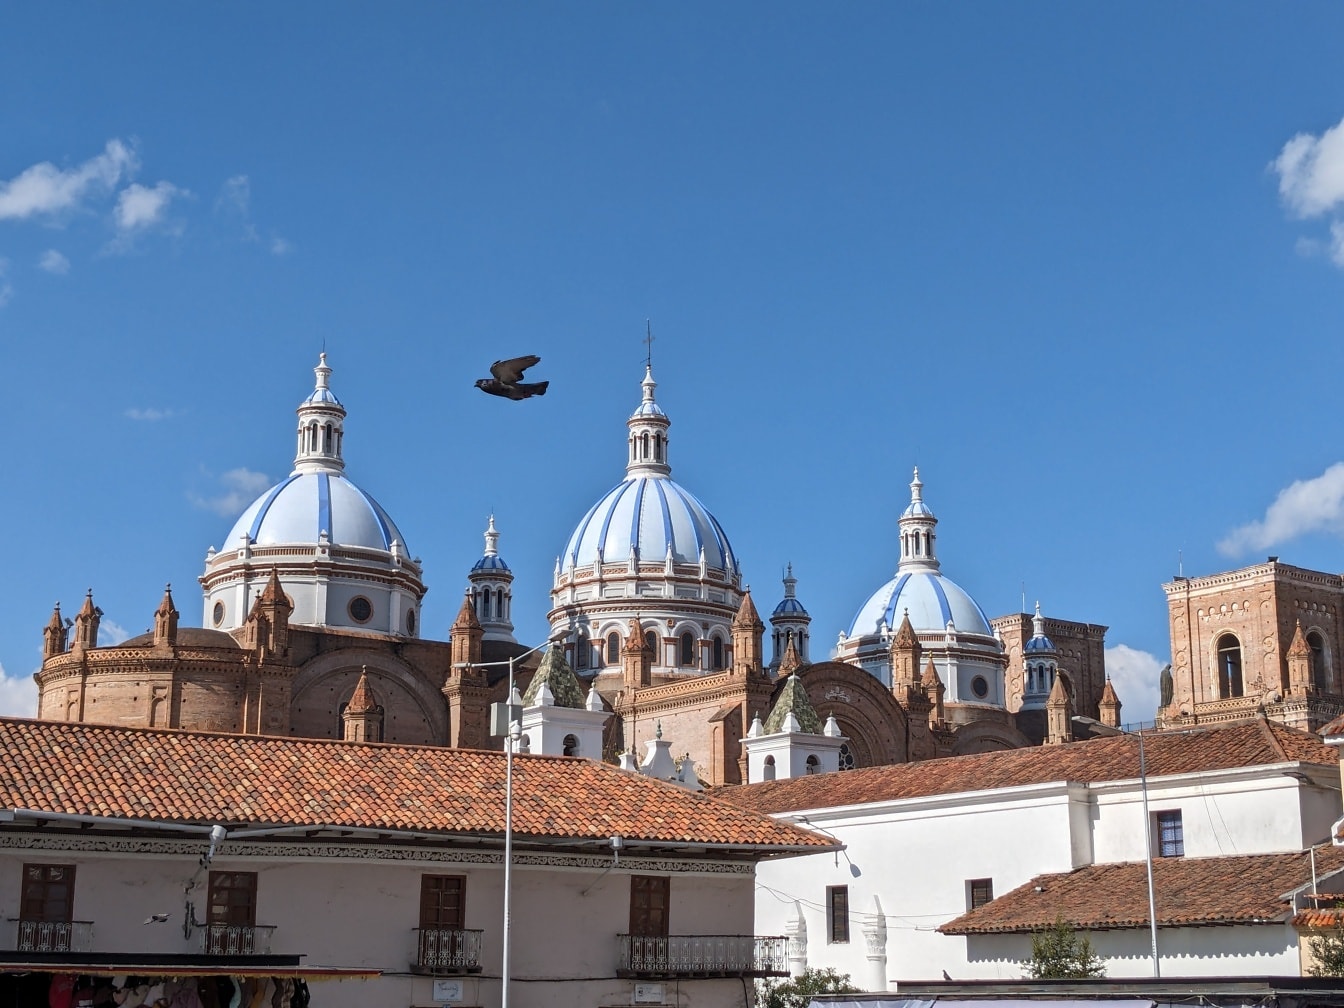 Domes of cathedral of the Immaculate Conception i Cuenca i Ecuador, en del af UNESCOs verdensarvsliste